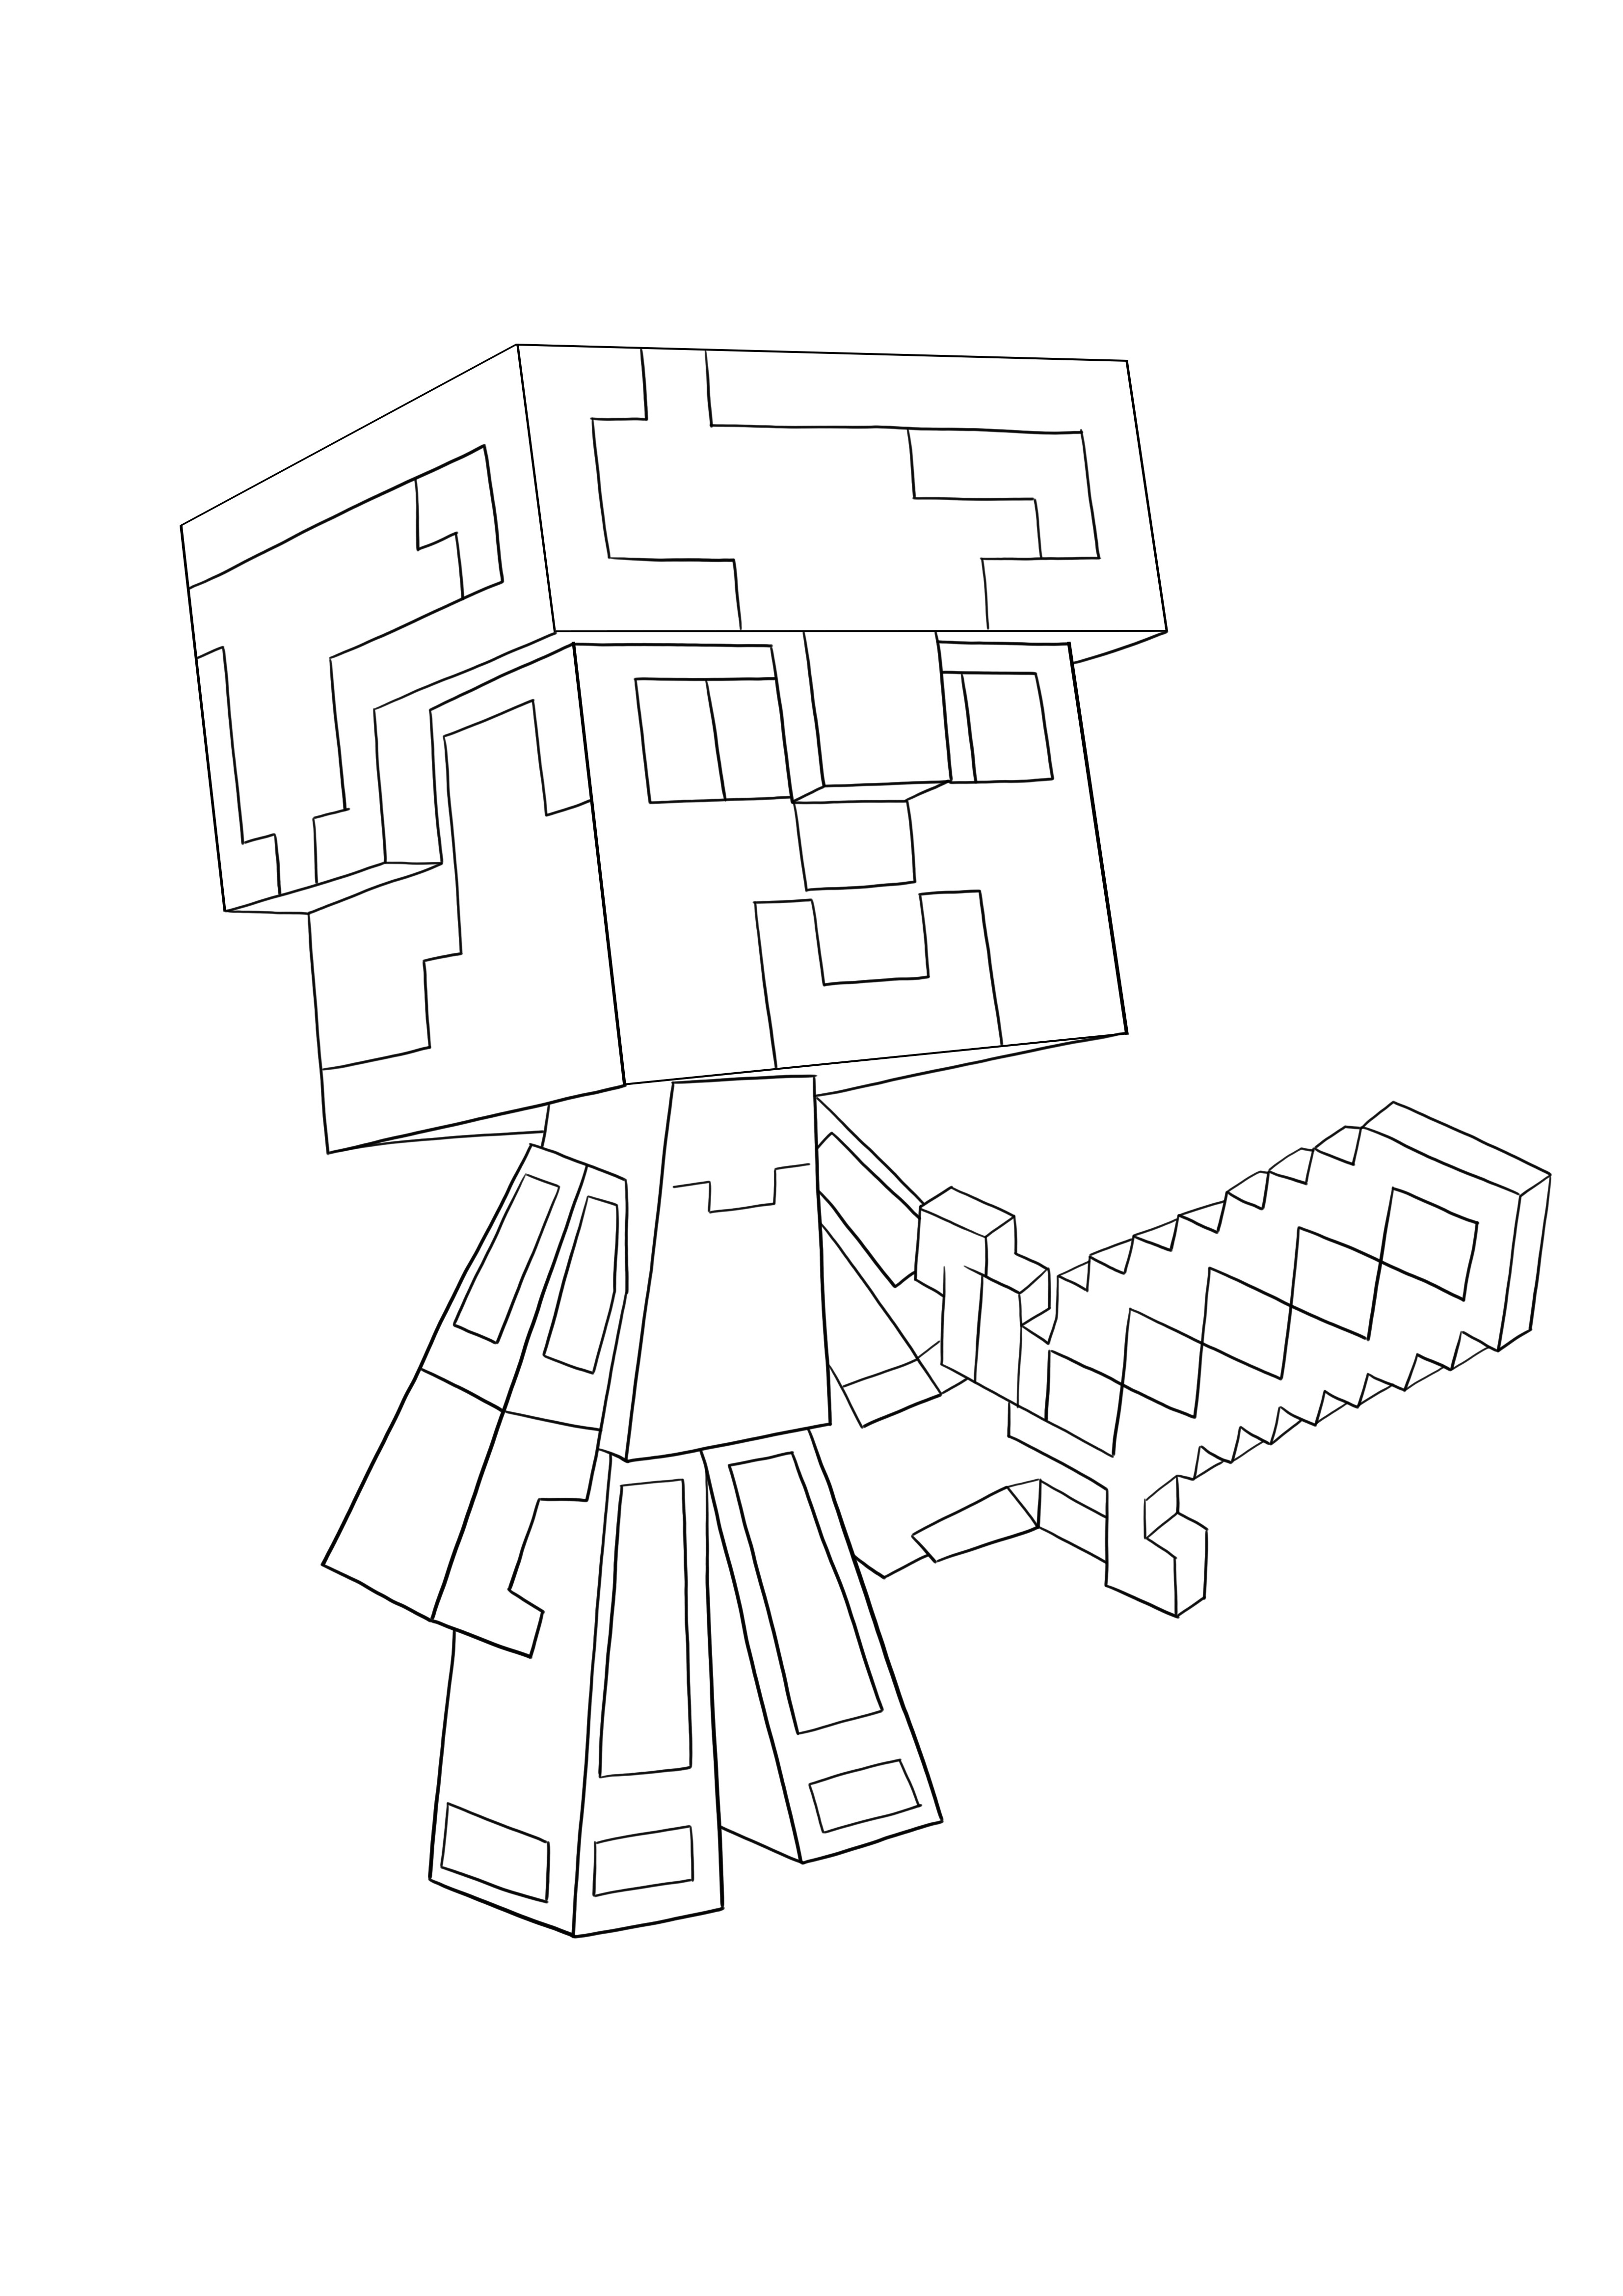 La armadura de Steve Diamond de Minecraft para imprimir gratis